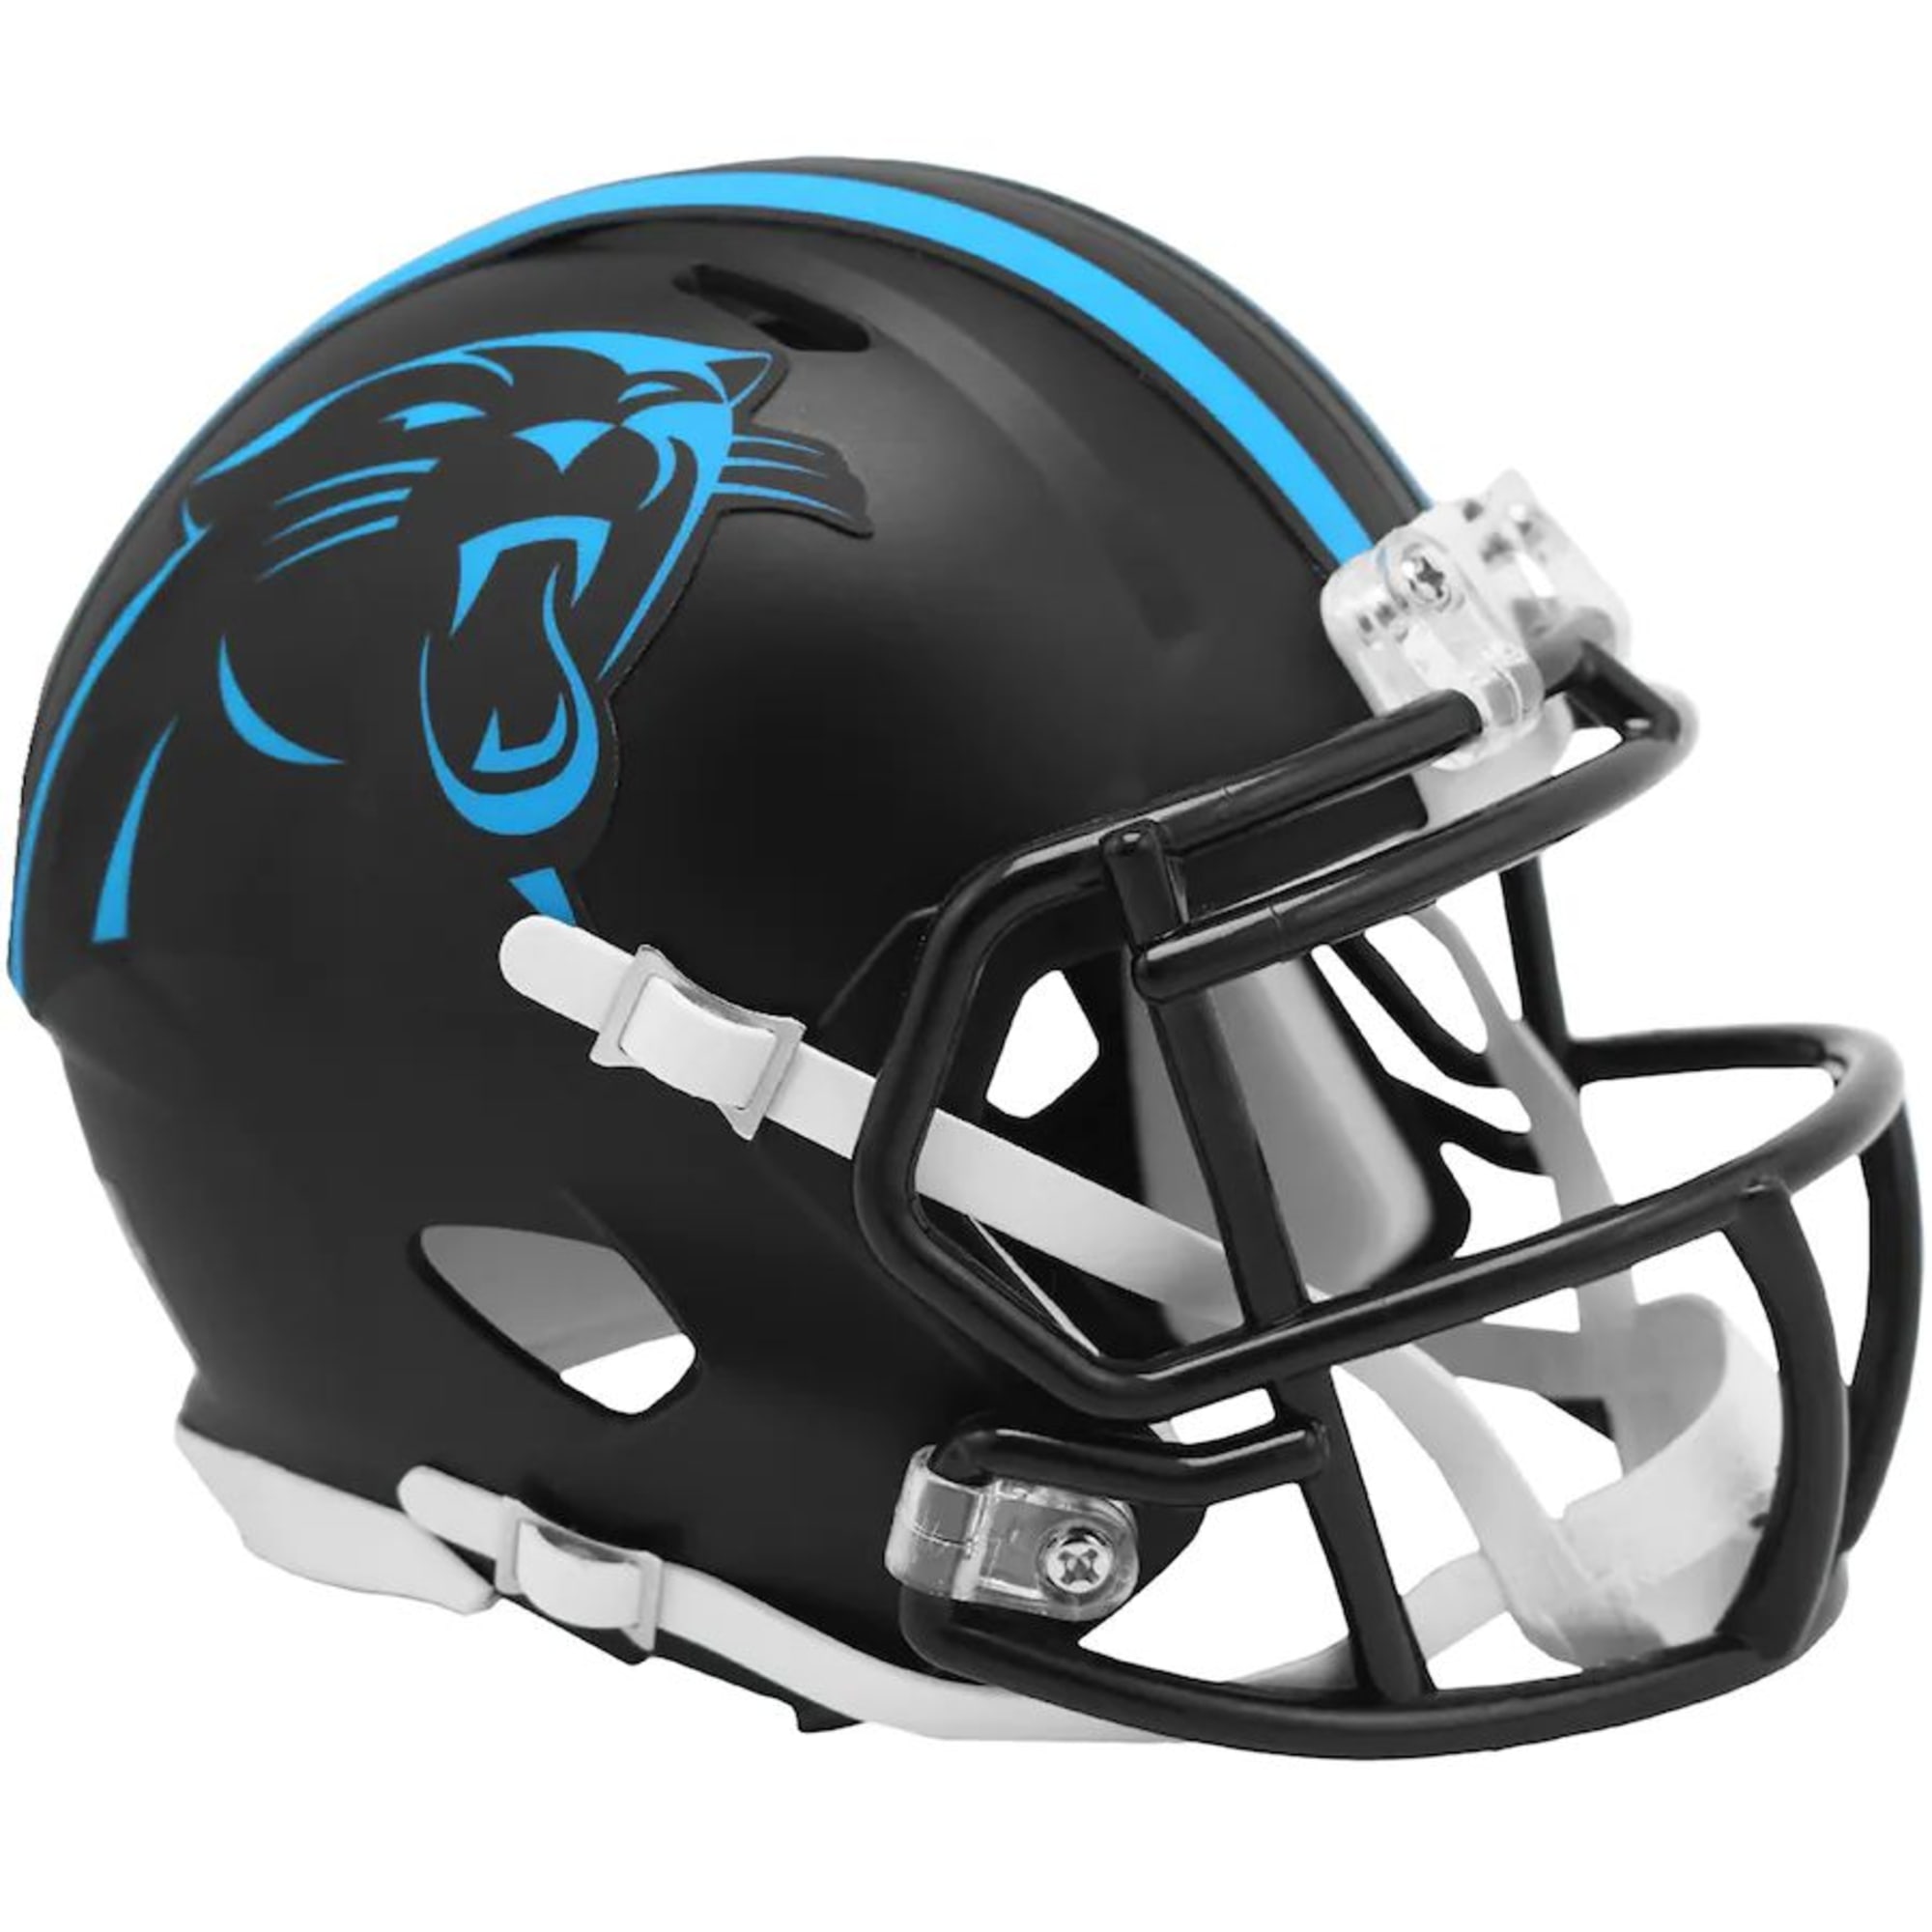 Order Your Carolina Panthers Alternate Helmet Today